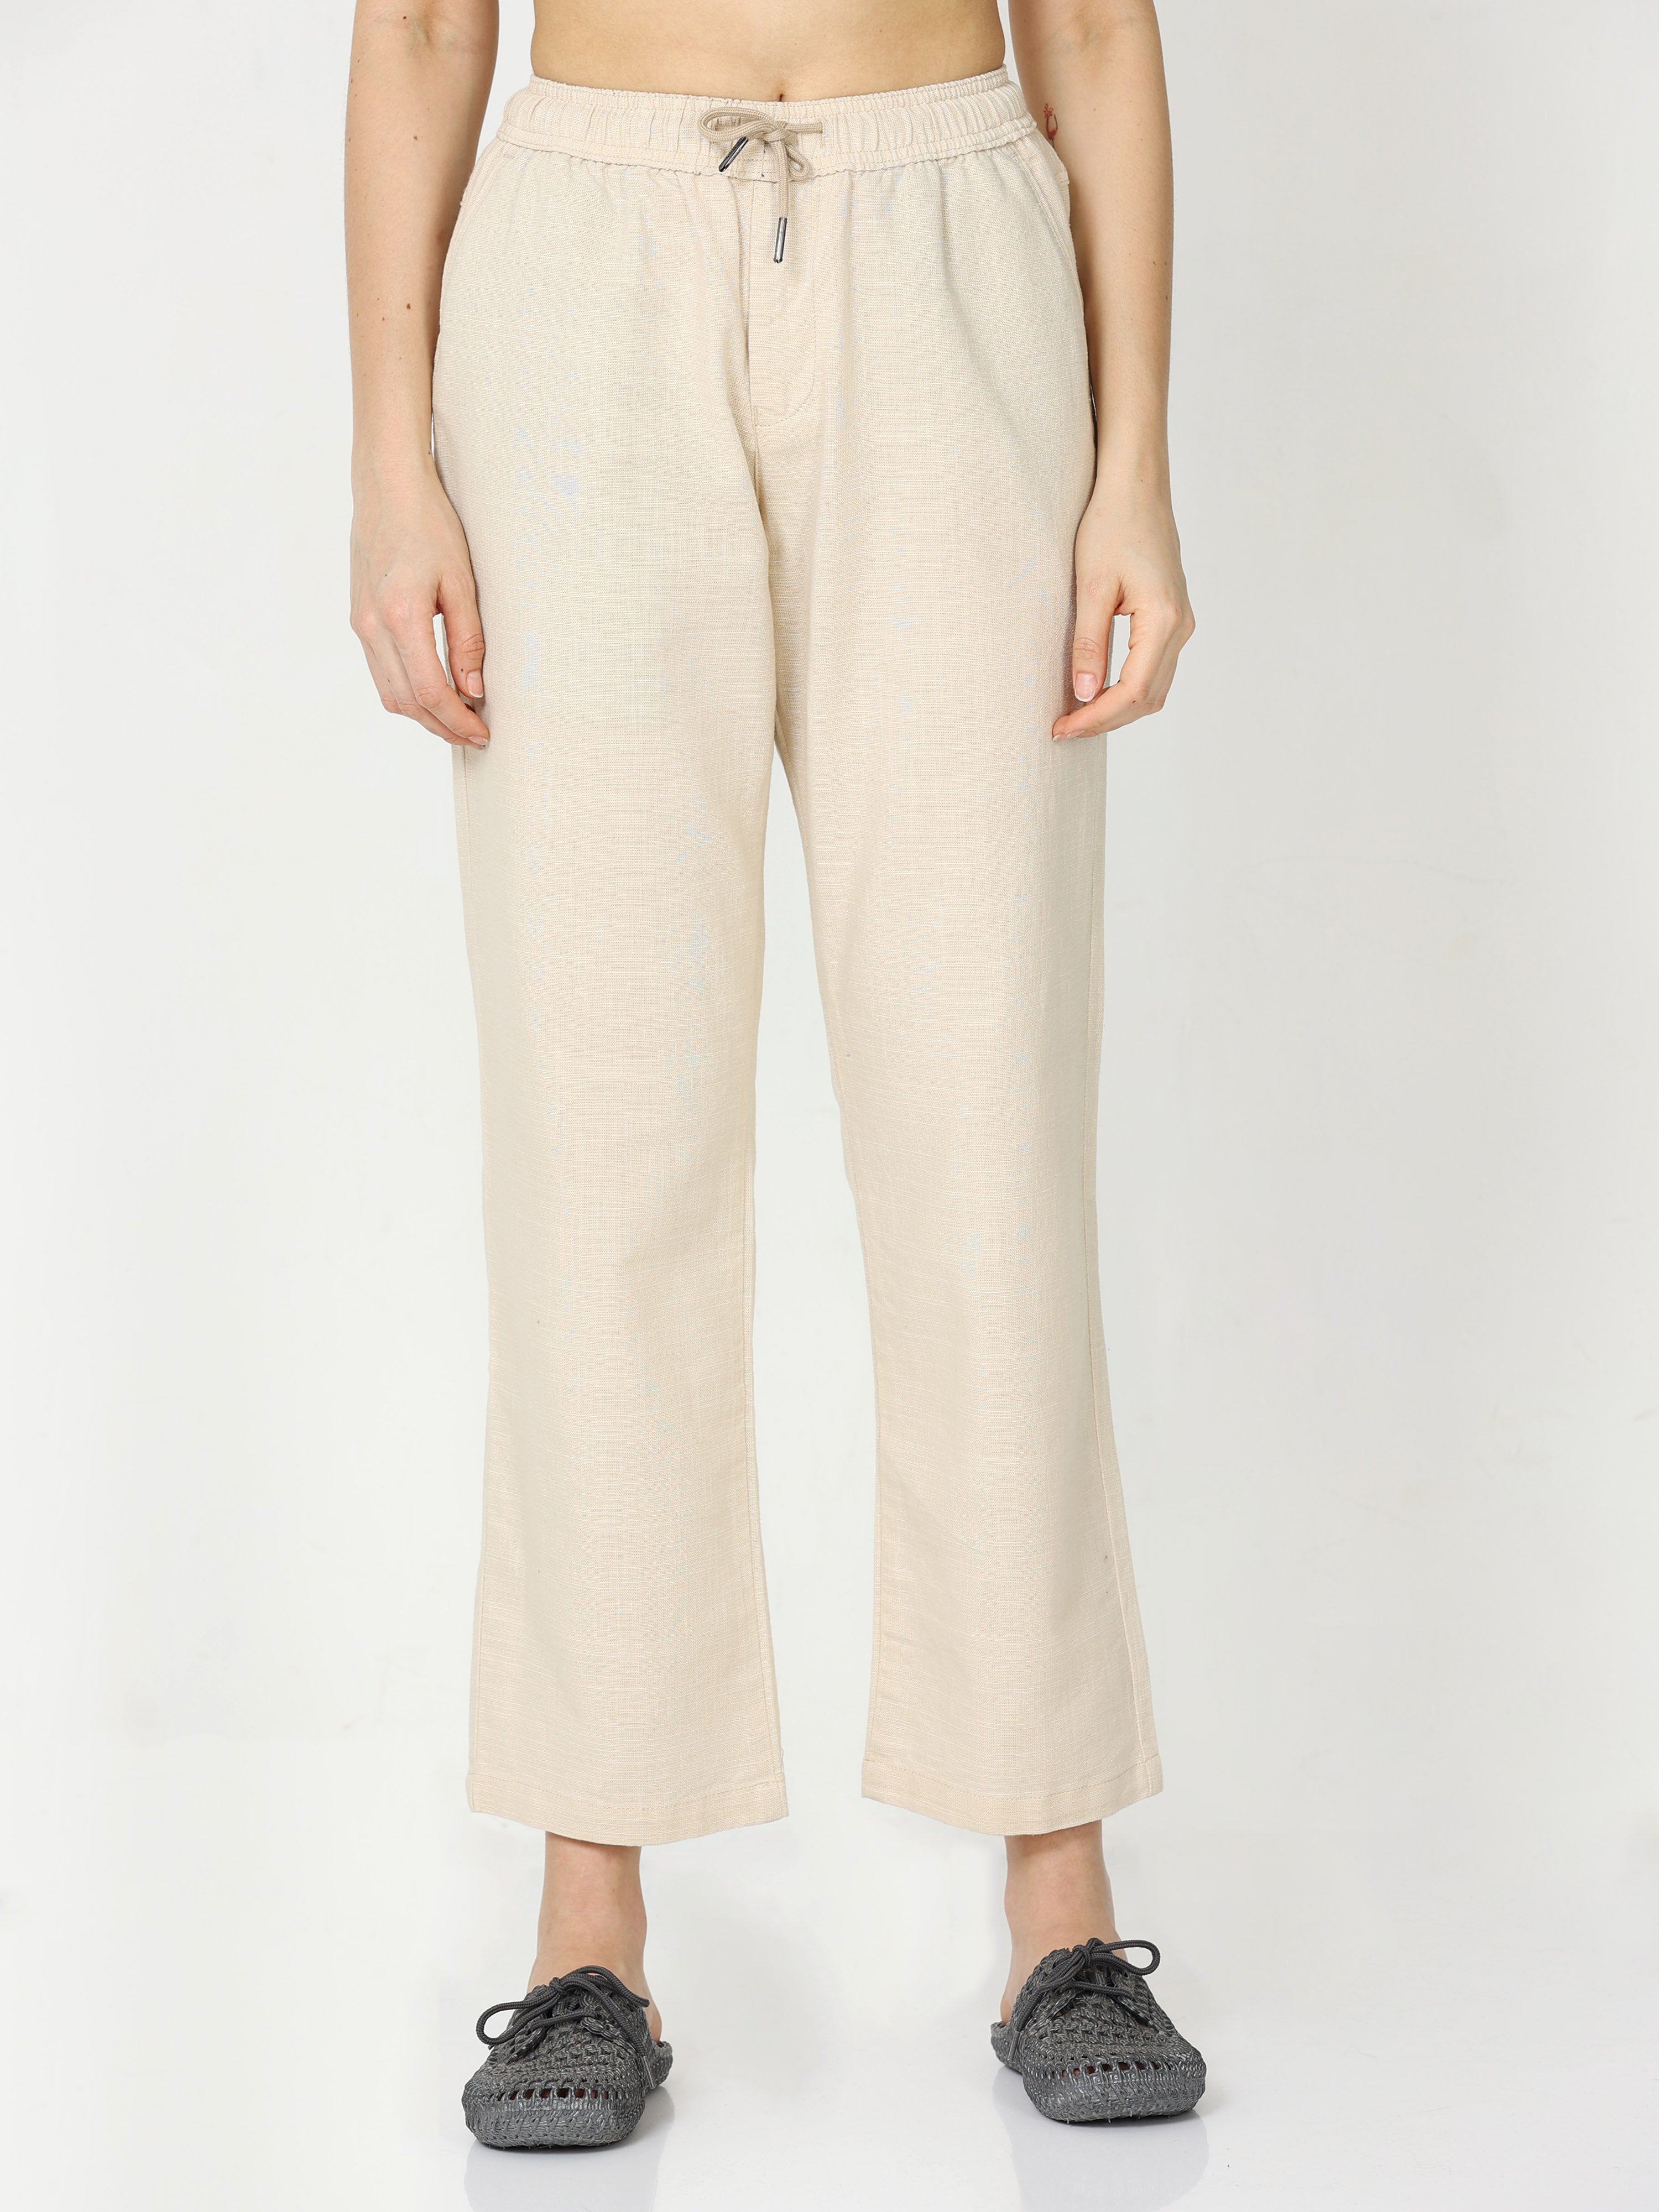 New Stylish Women's Cashmere Woolen Wide Leg Pants High Waist Trousers @ |  eBay